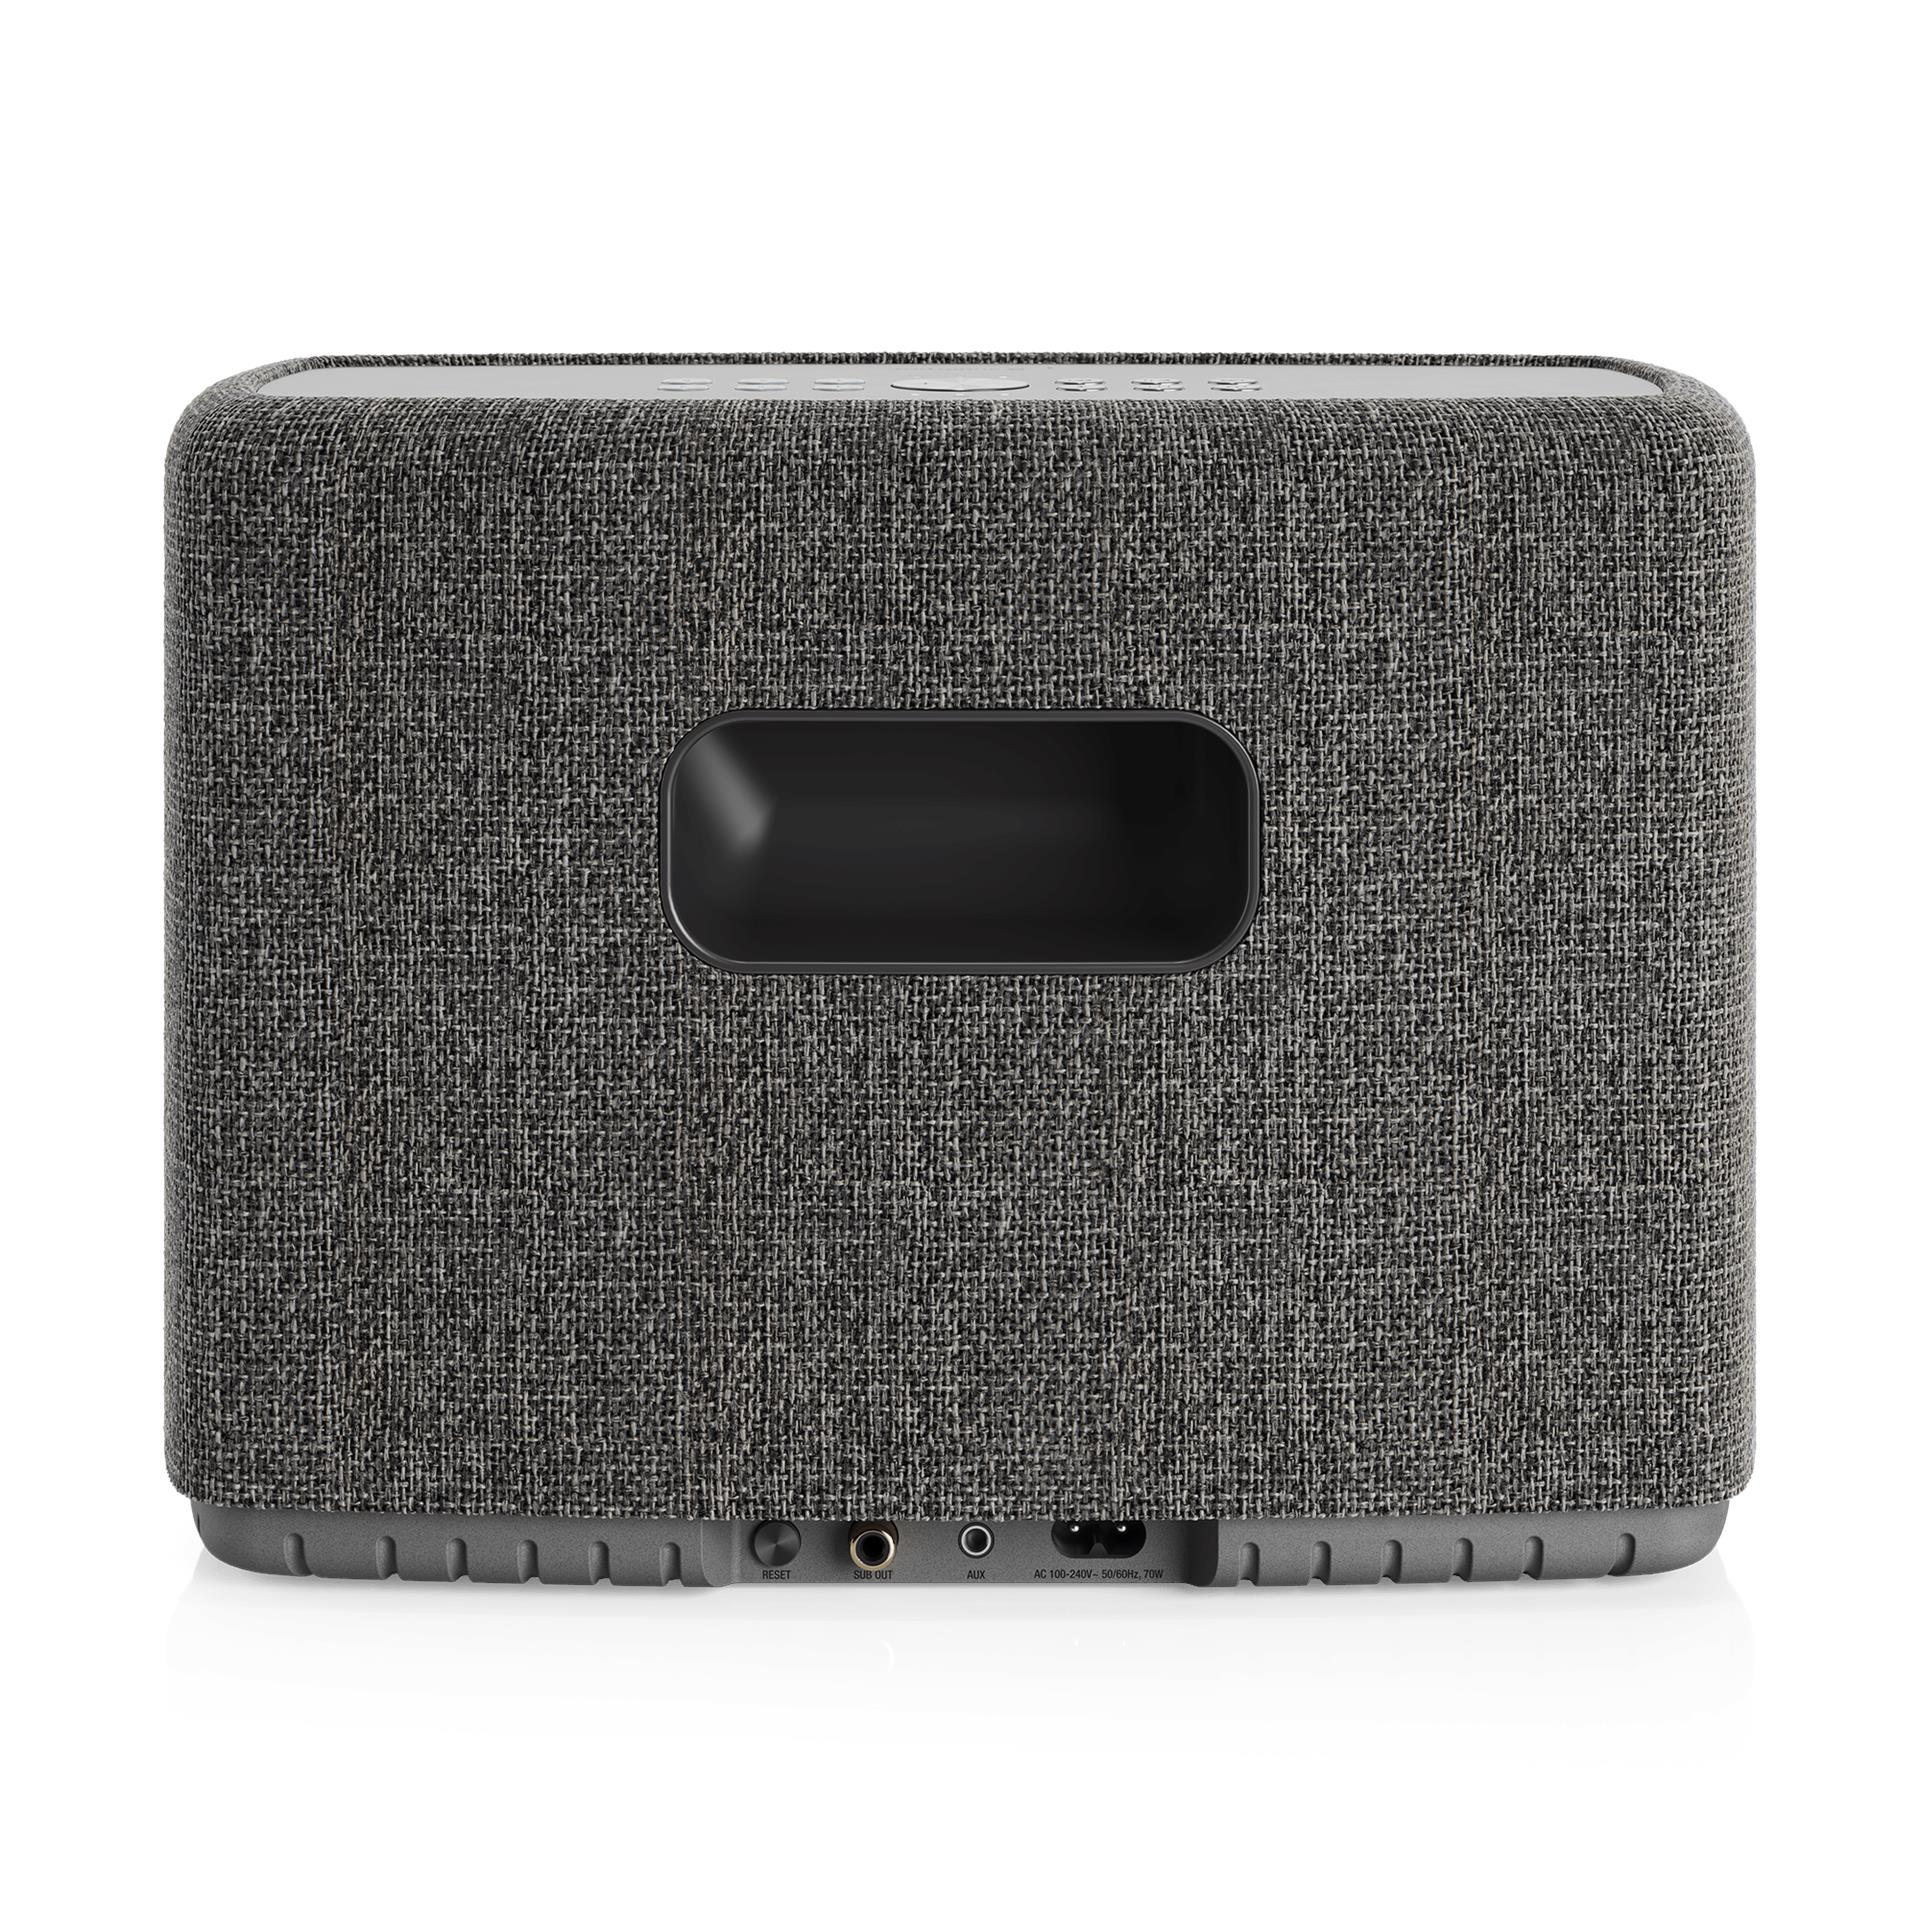 Audio Pro A15 wireless Multiroom speaker, Dark Grey